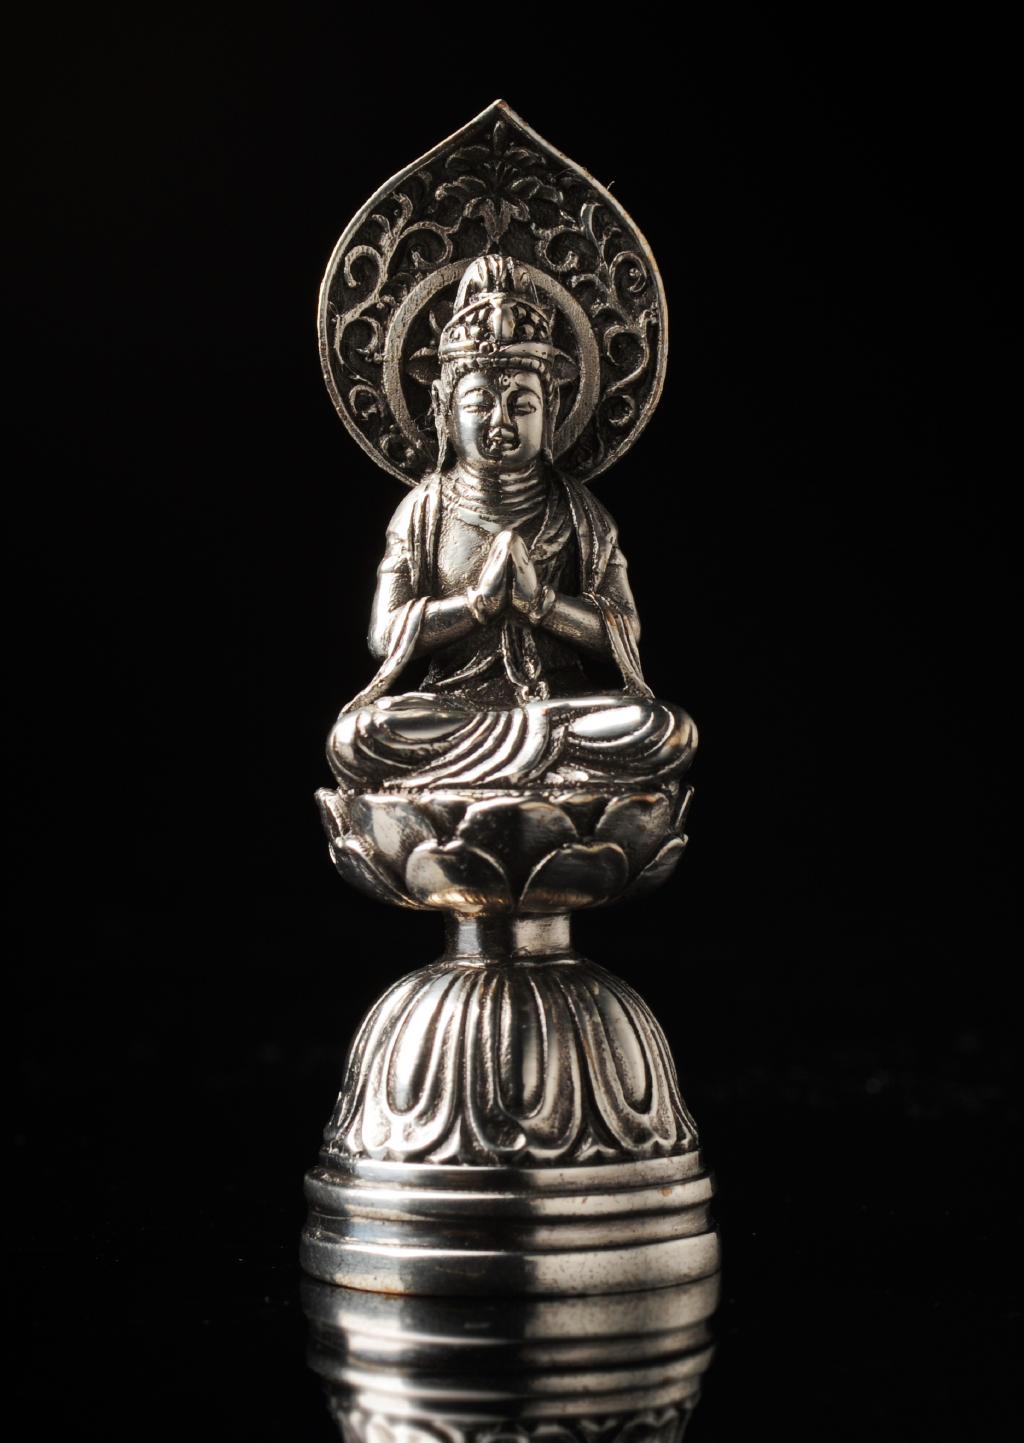 仏像 勢至菩薩 銀製 伝統工芸 高岡銅器 謹製 日本の手技 高岡銅器の仏像 本格仏像の仏像ワールド